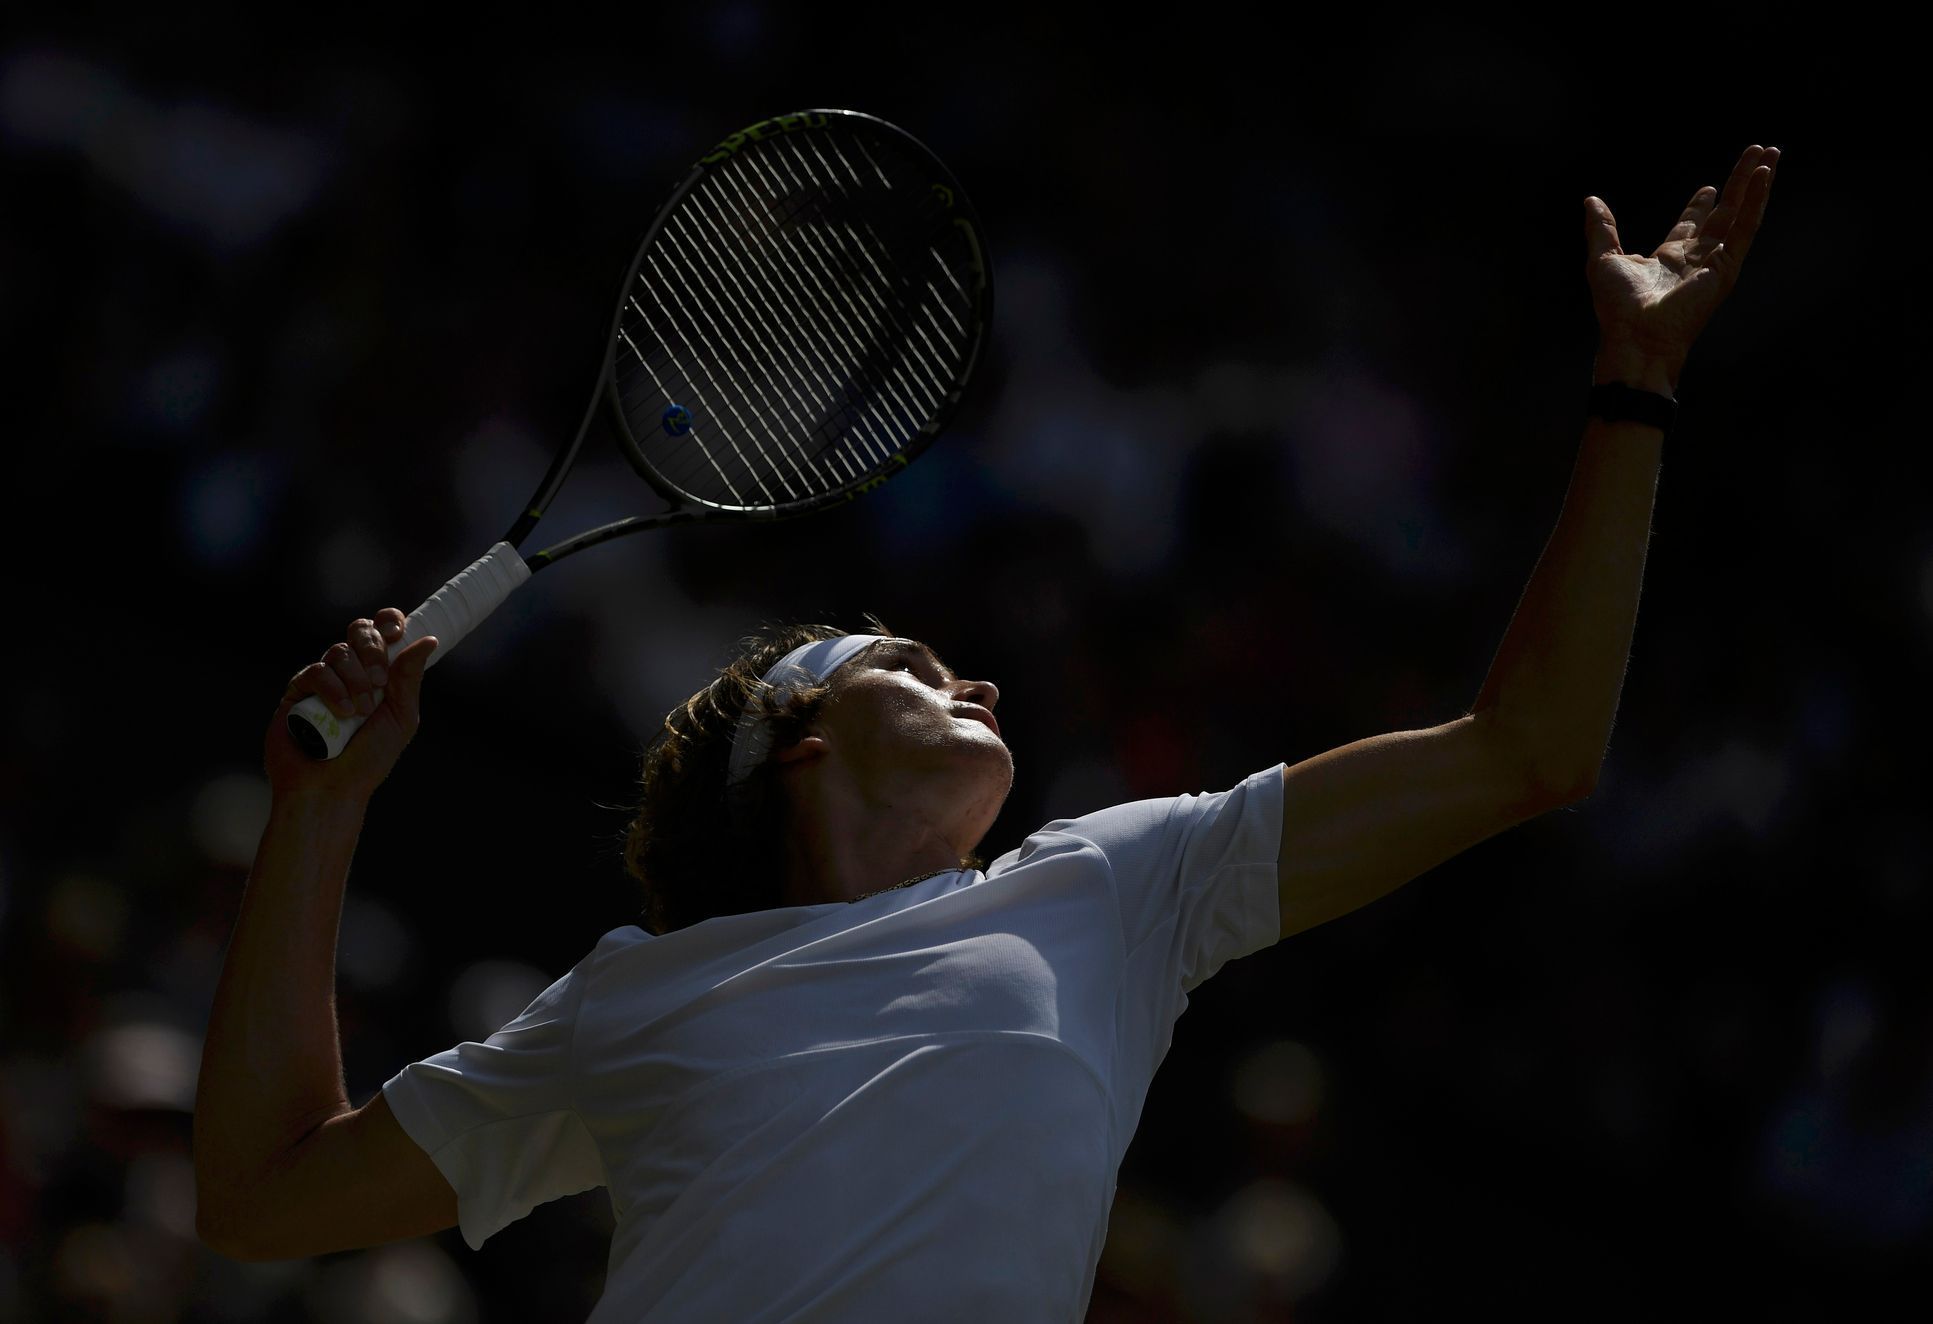 Wimbledon 2016: Alexander Zverev